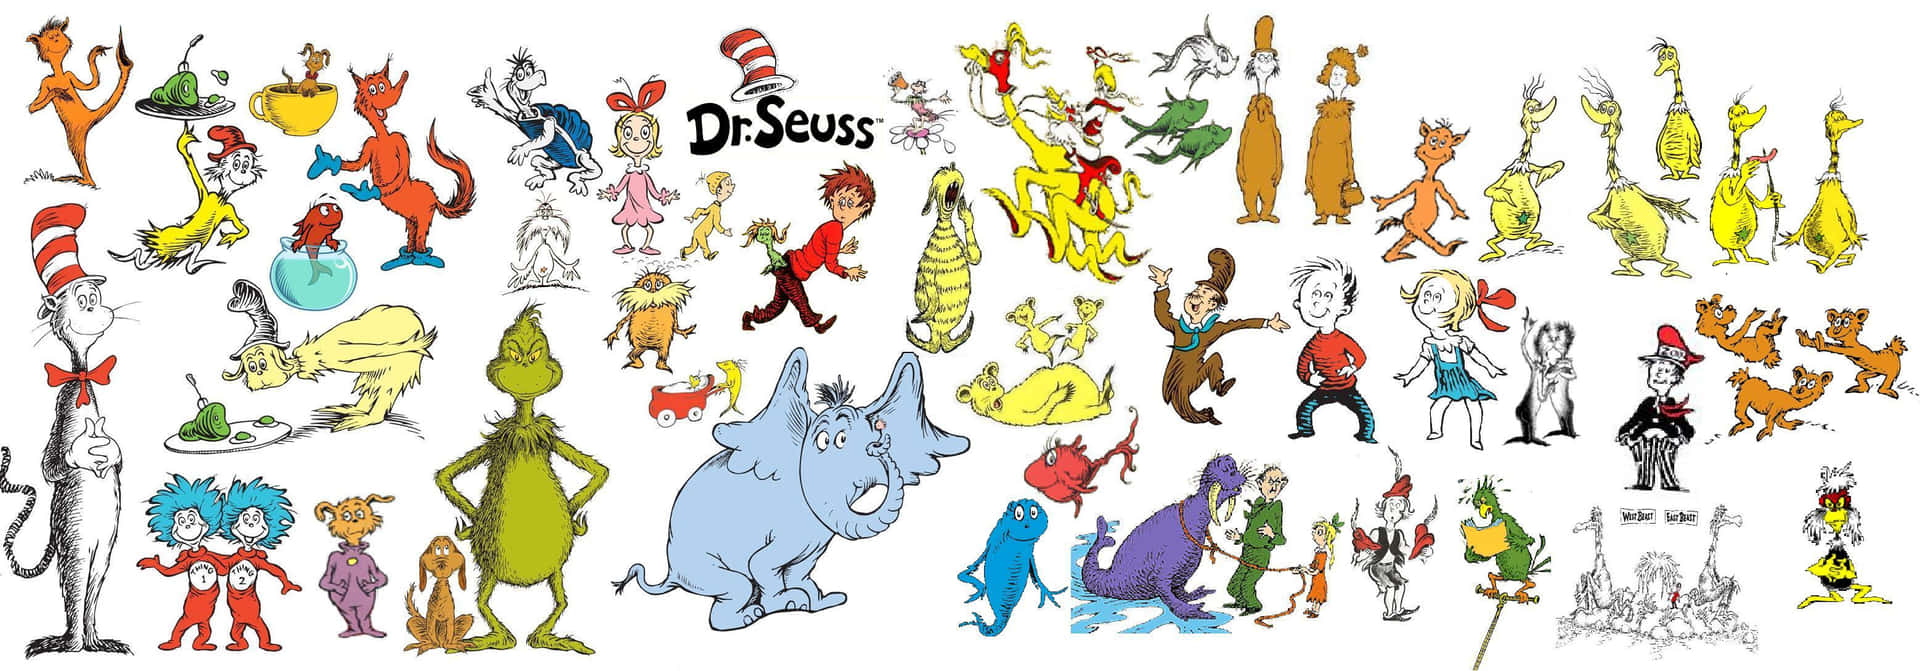 Fantastisk Dr. Seuss bogkarakterer illustration som baggrund Wallpaper